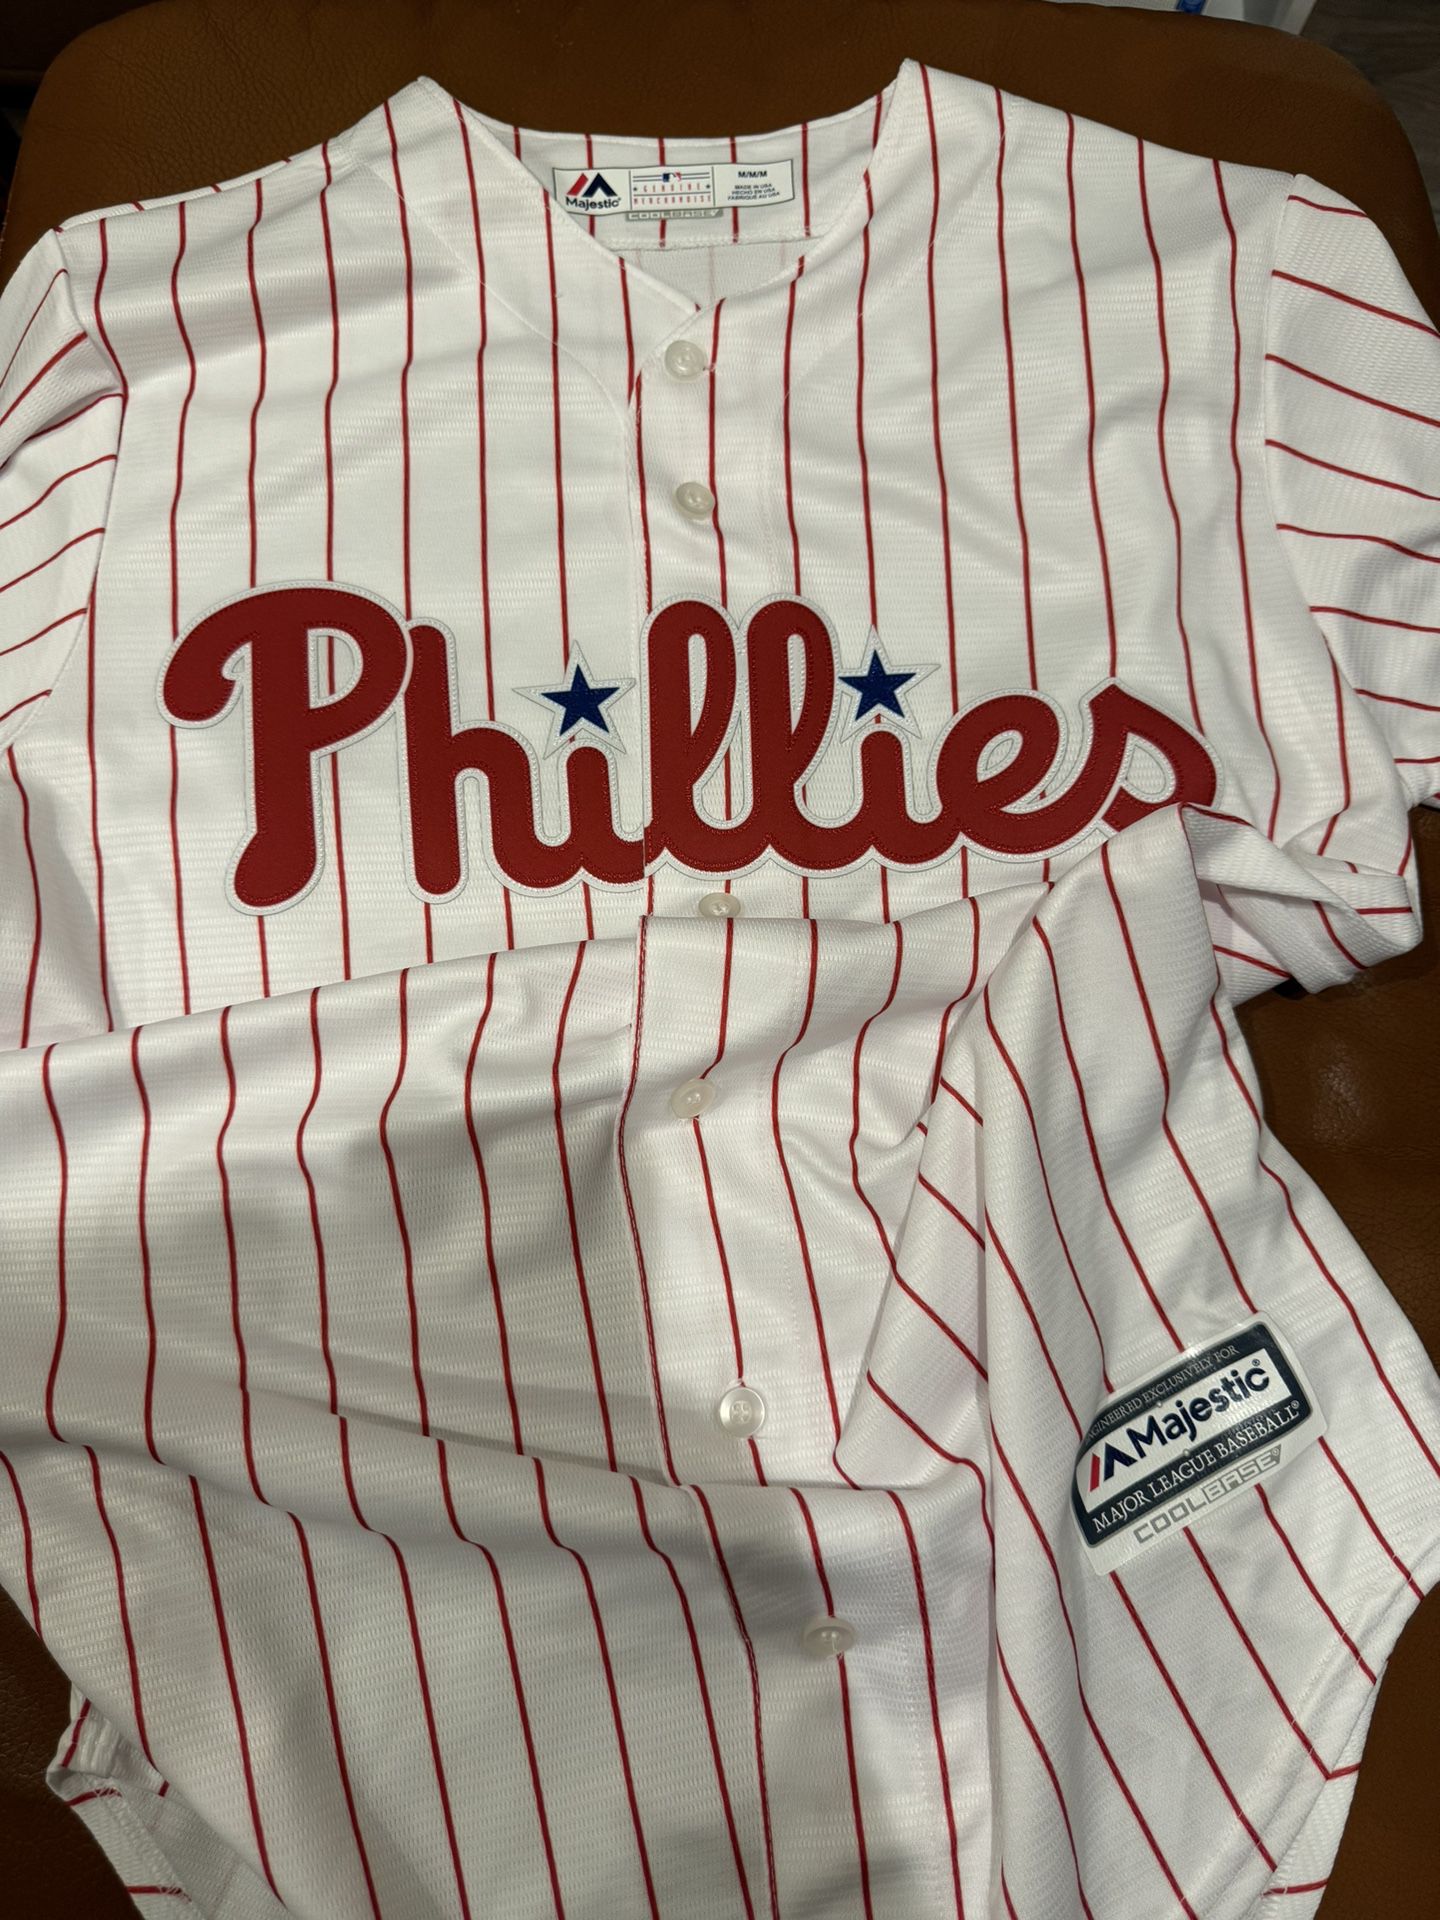 Majestic Phillies Baseball Jersey size Medium Men New No Tags